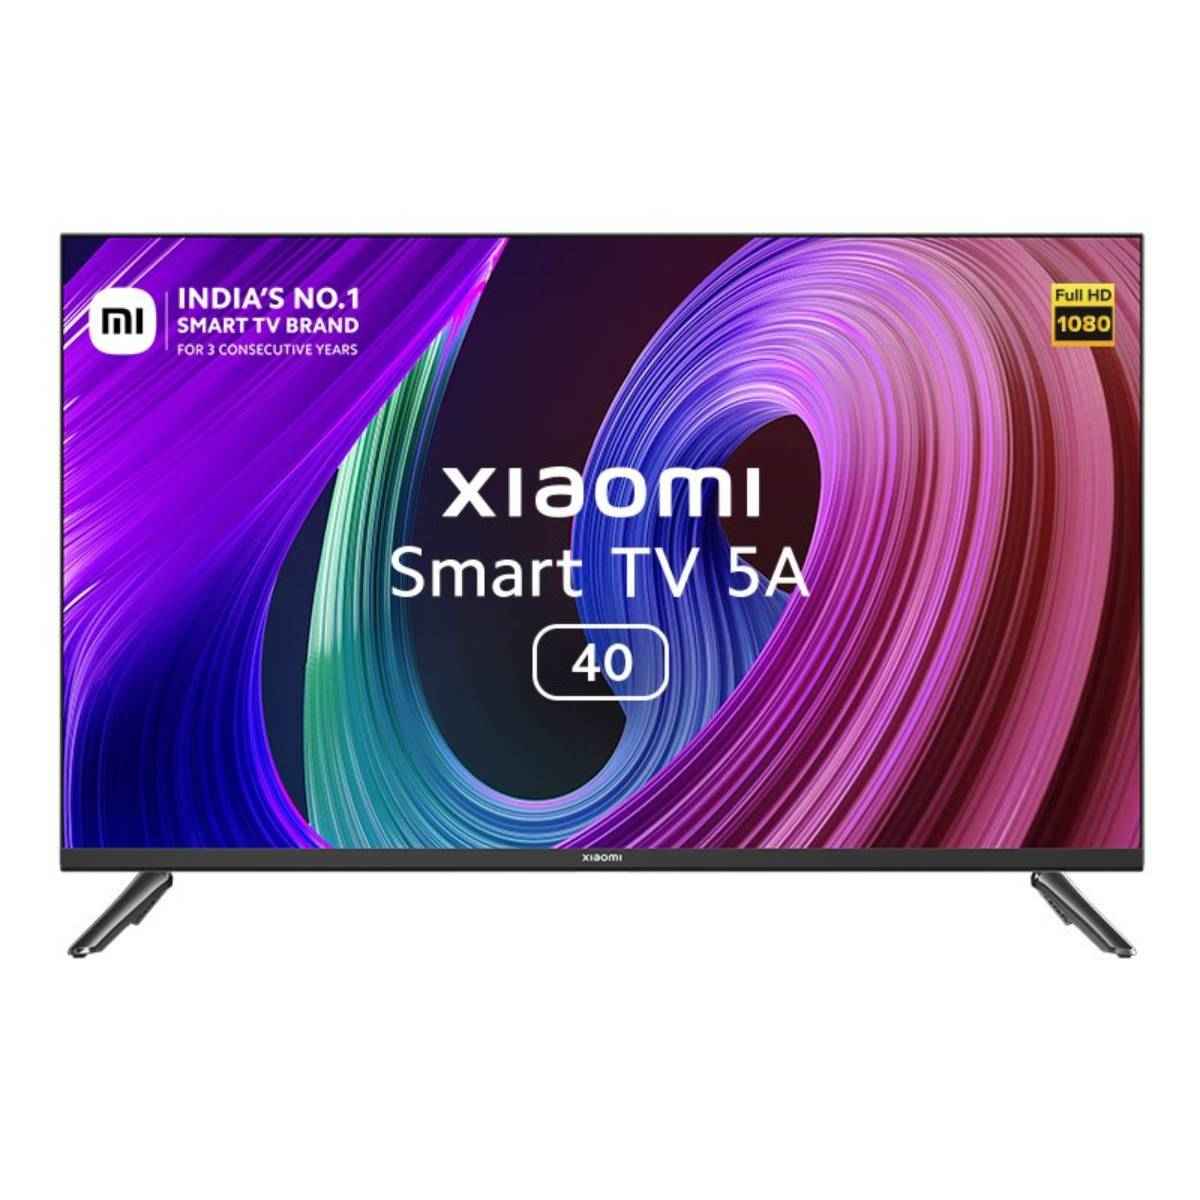 Xiaomi Smart TV 5A 40-inches Full HD LED  TV (2022)